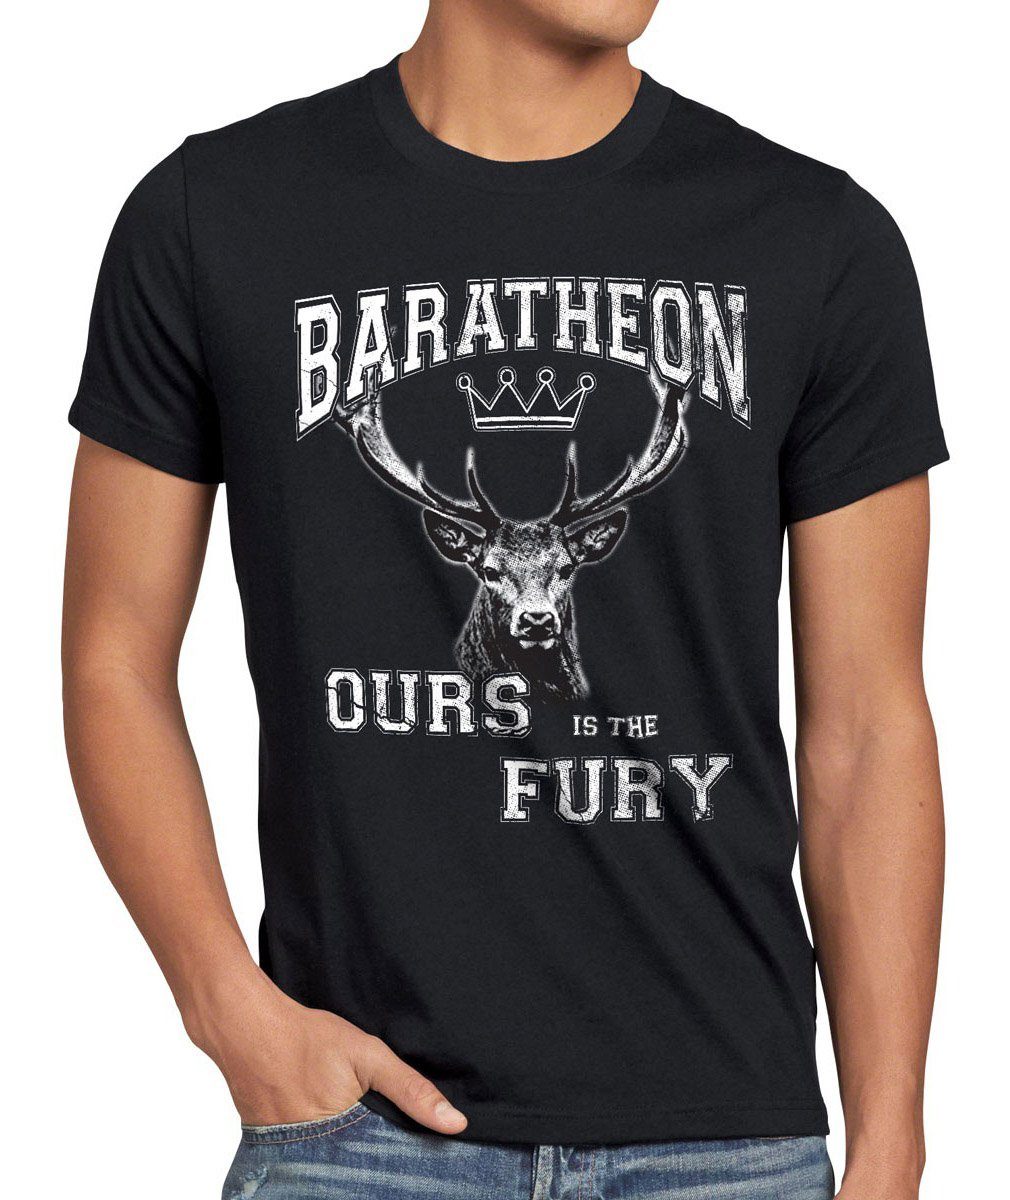 style3 Print-Shirt Herren T-Shirt Baratheon ours the fury college thrones of game got haus hirsch